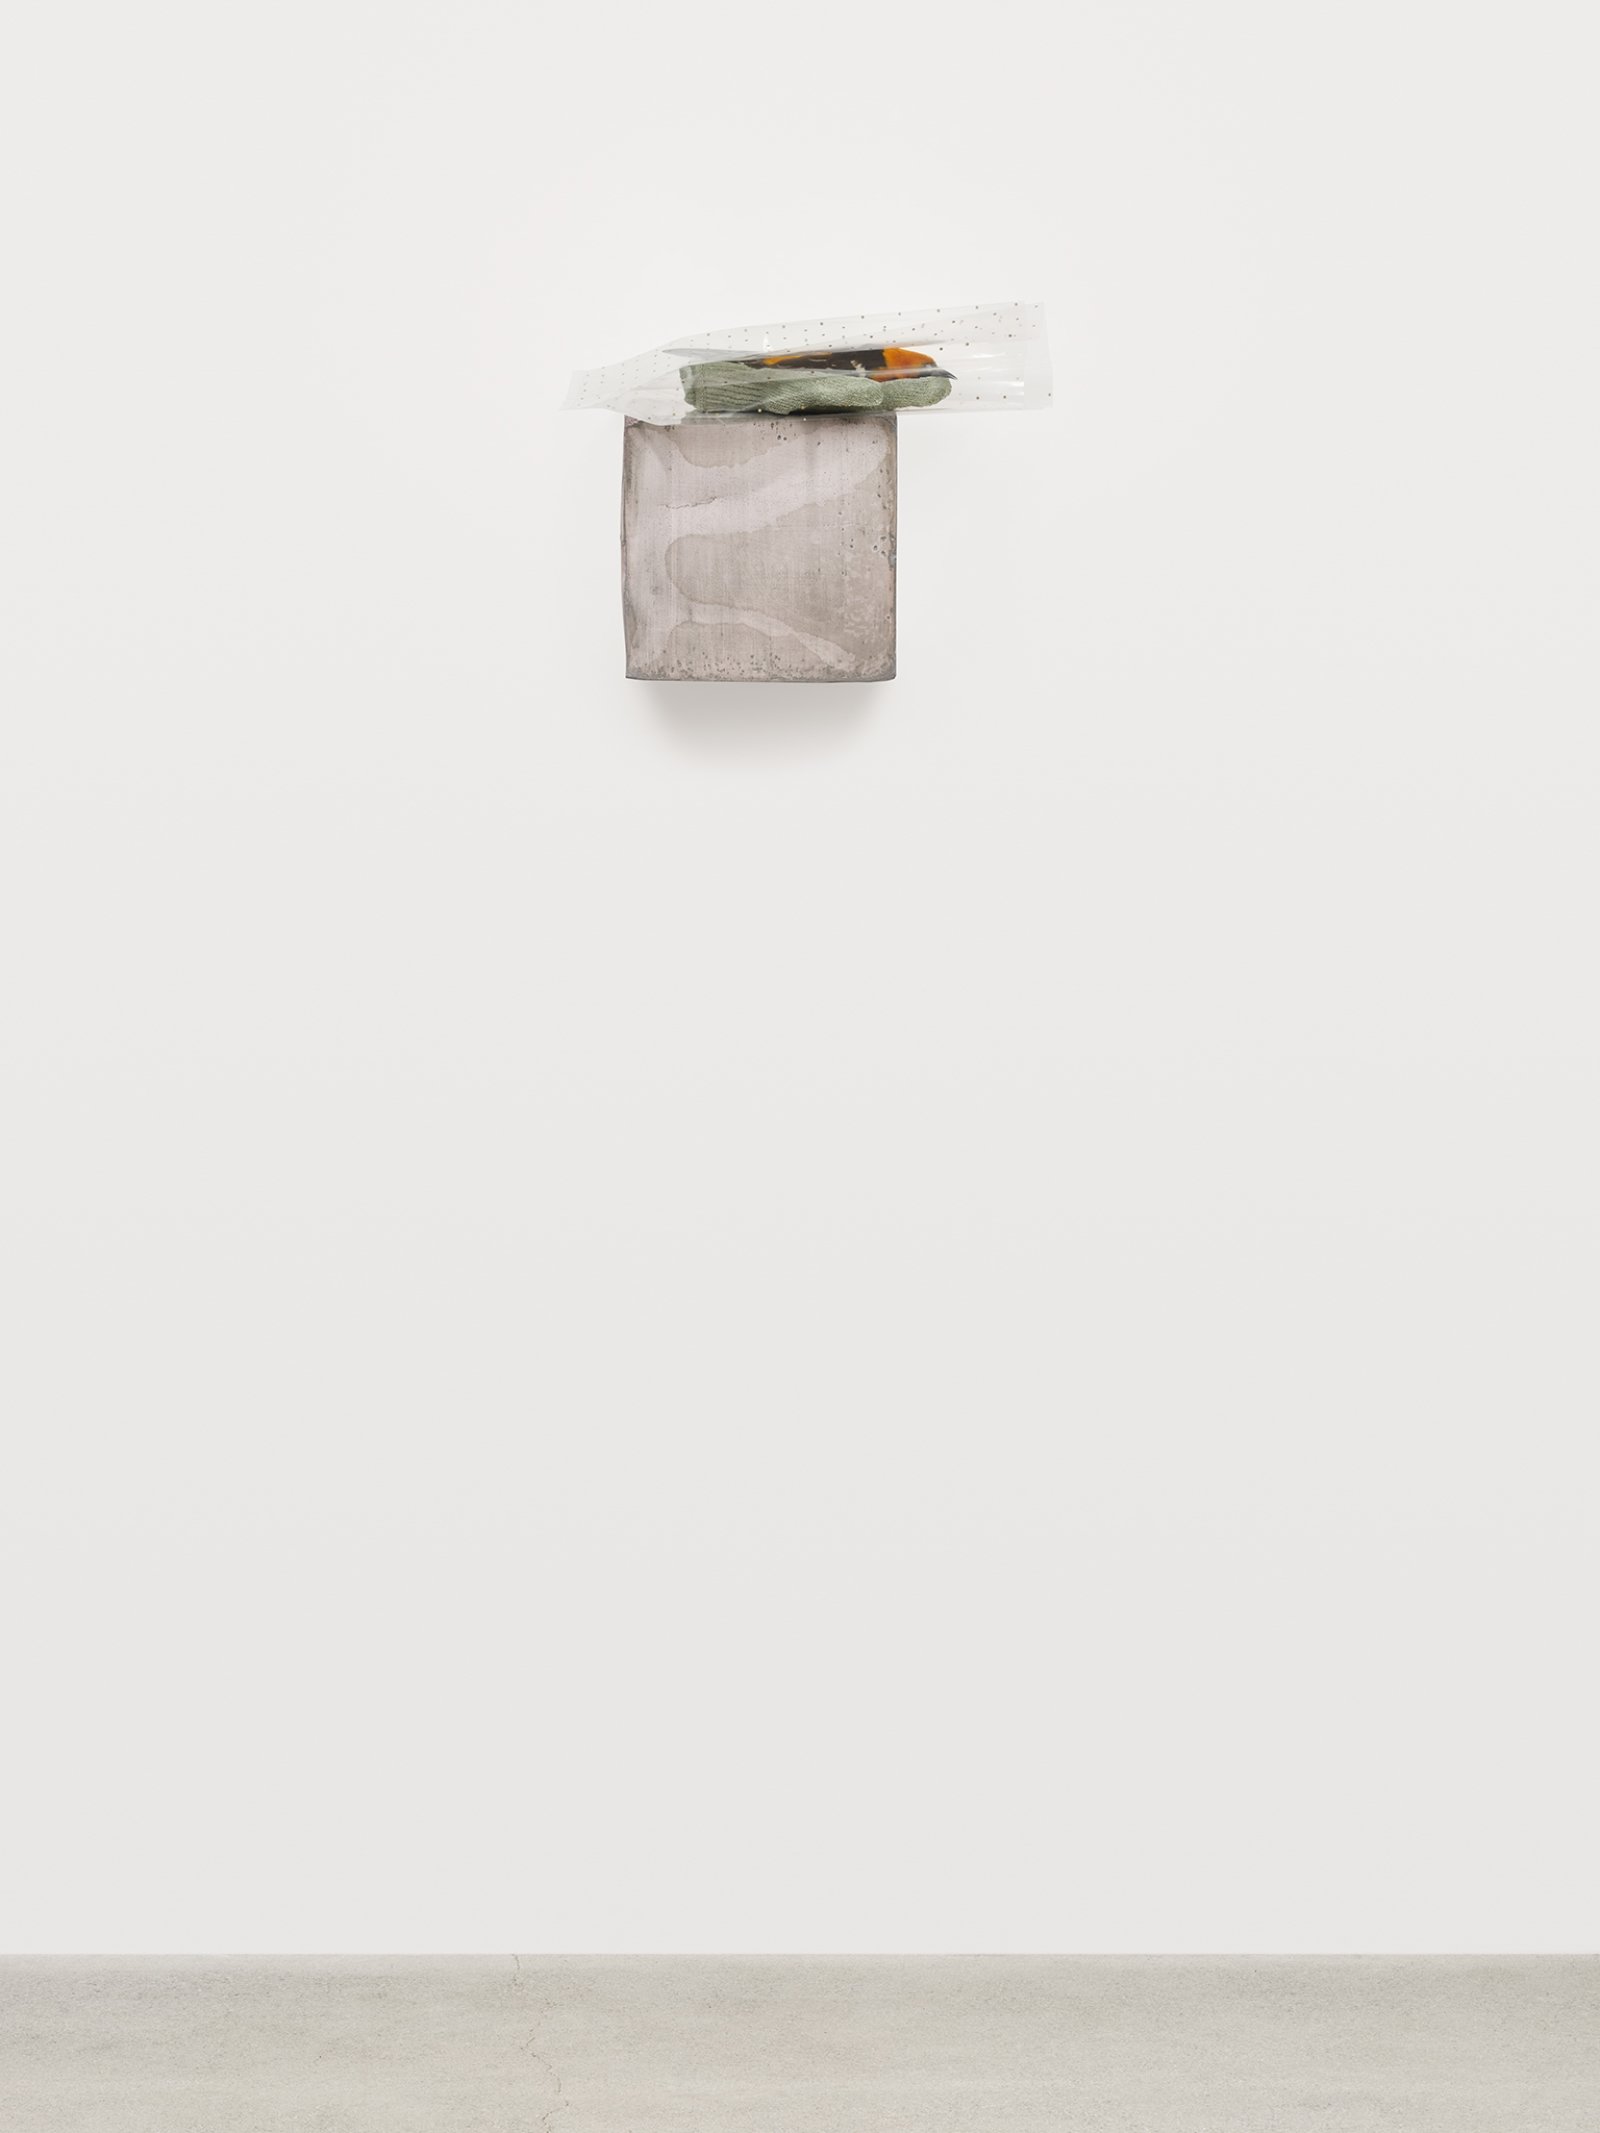 Liz Magor, Small Hand, 2019, polymerized gypsum, naturalized bird, cellophane, 10 x 12 x 6 in. (25 x 31 x 17 cm)